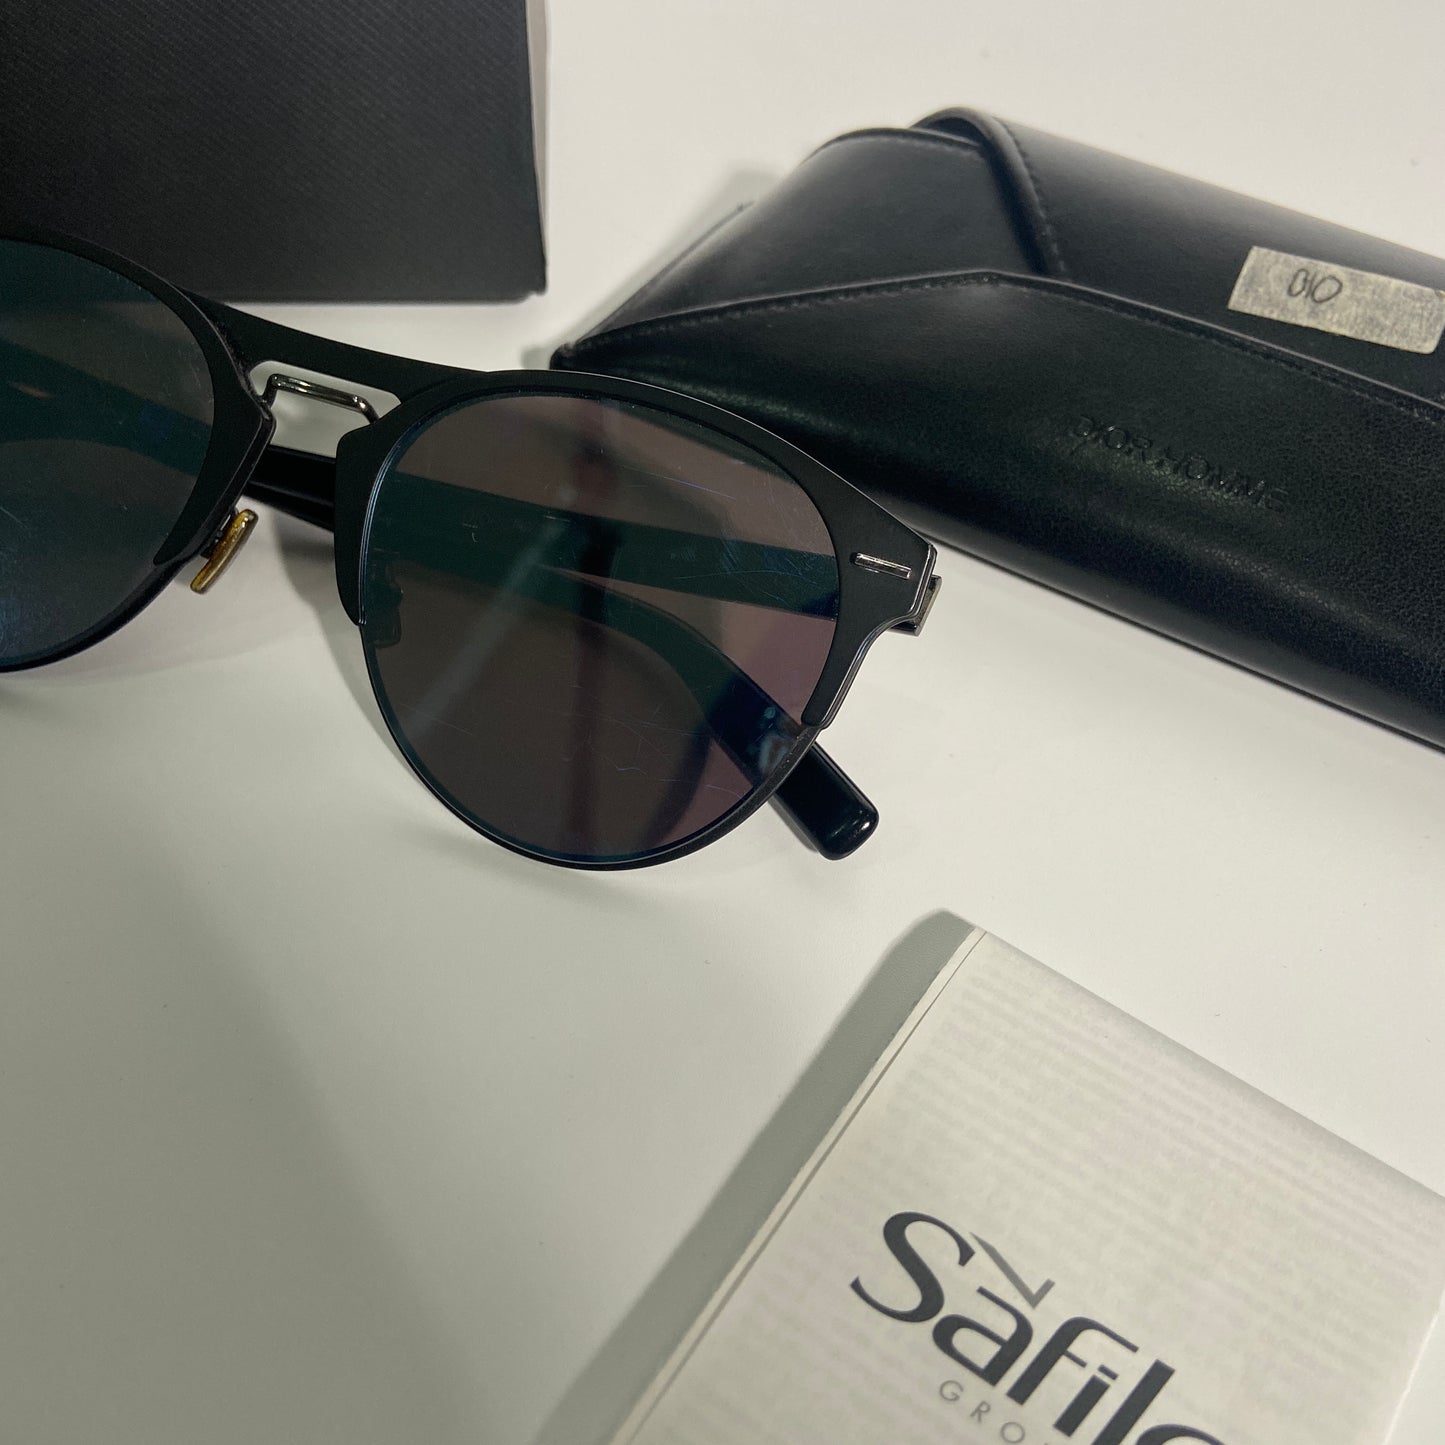 [Preloved] Christian Dior Sunglasses 4 Dark Brown Finish